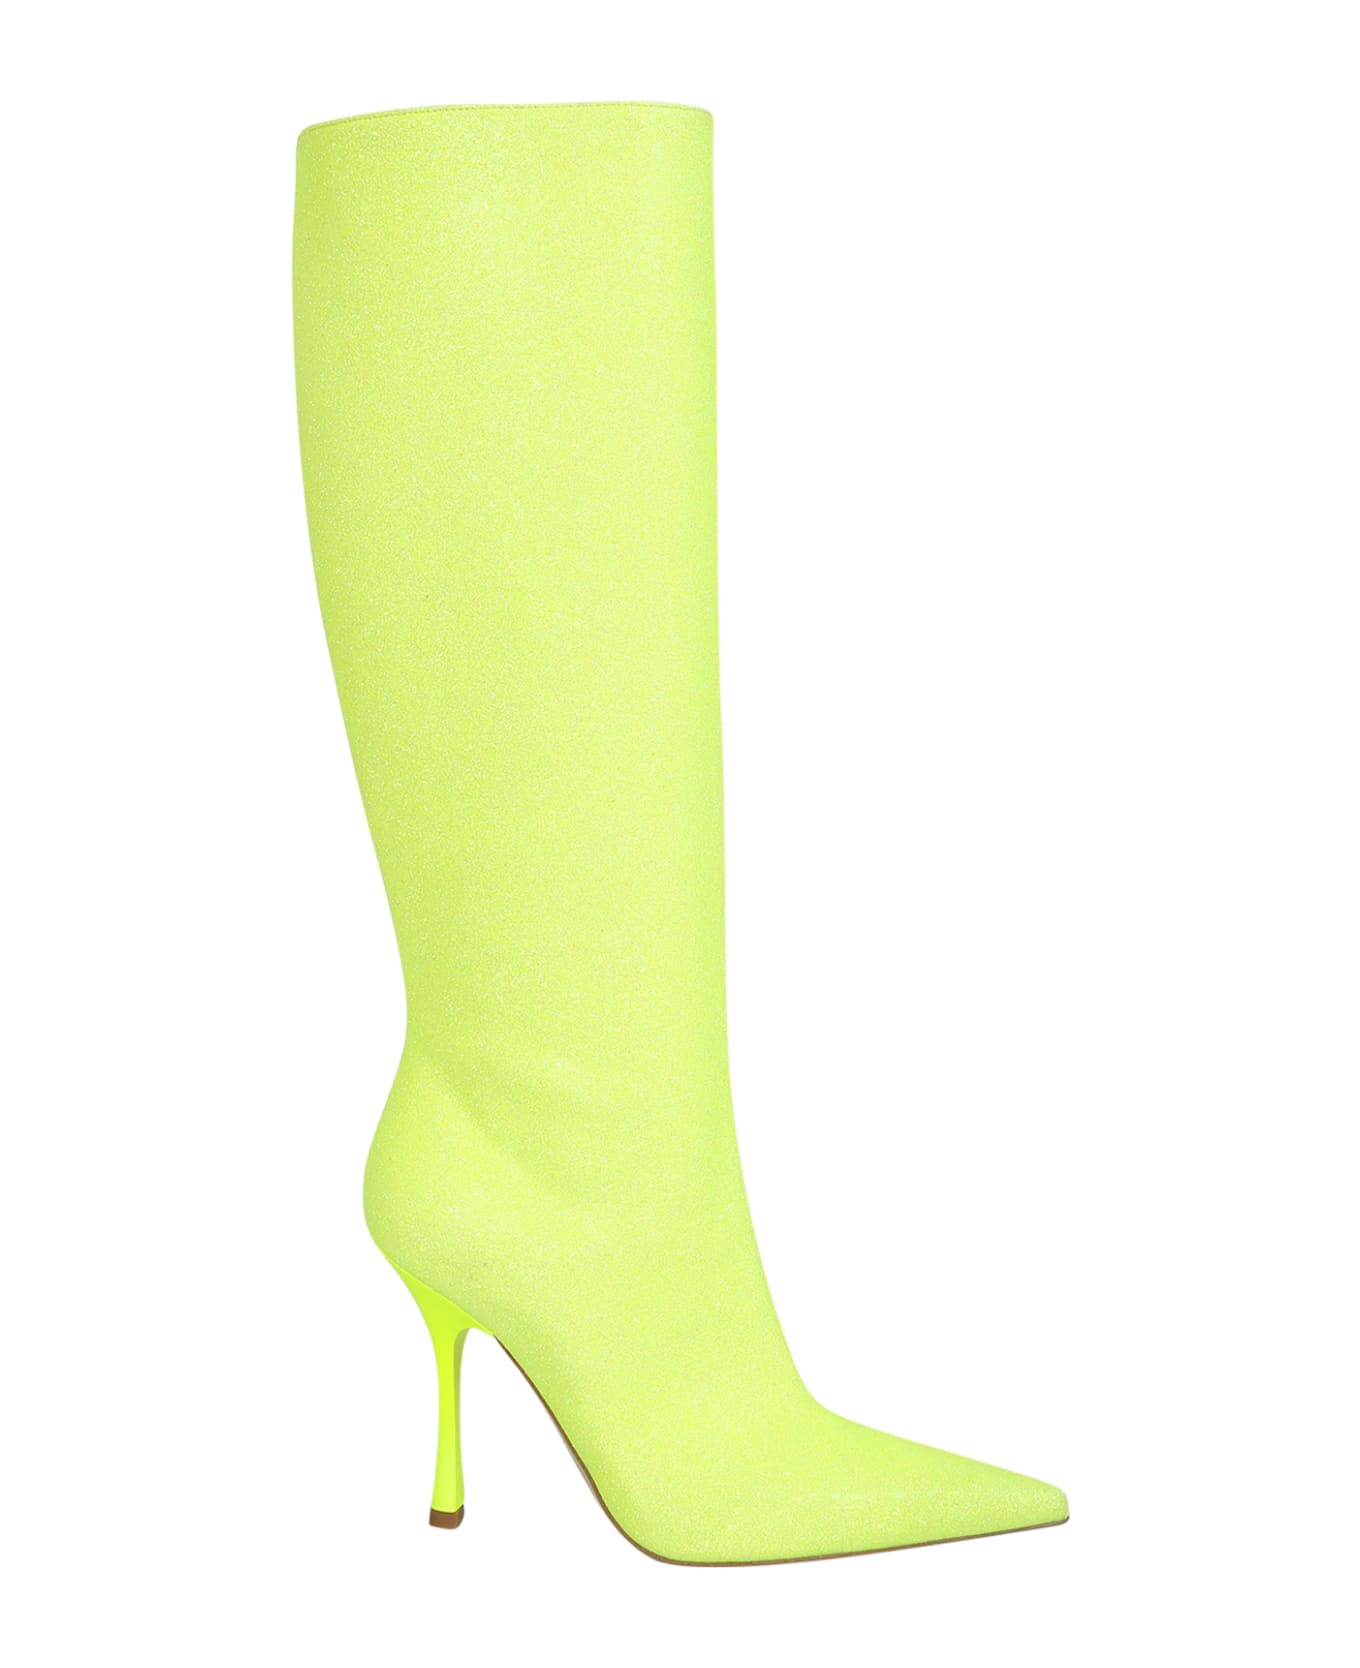 Leonie Hanne High-heel Micro-glitter Boots - Yellow ブーツ